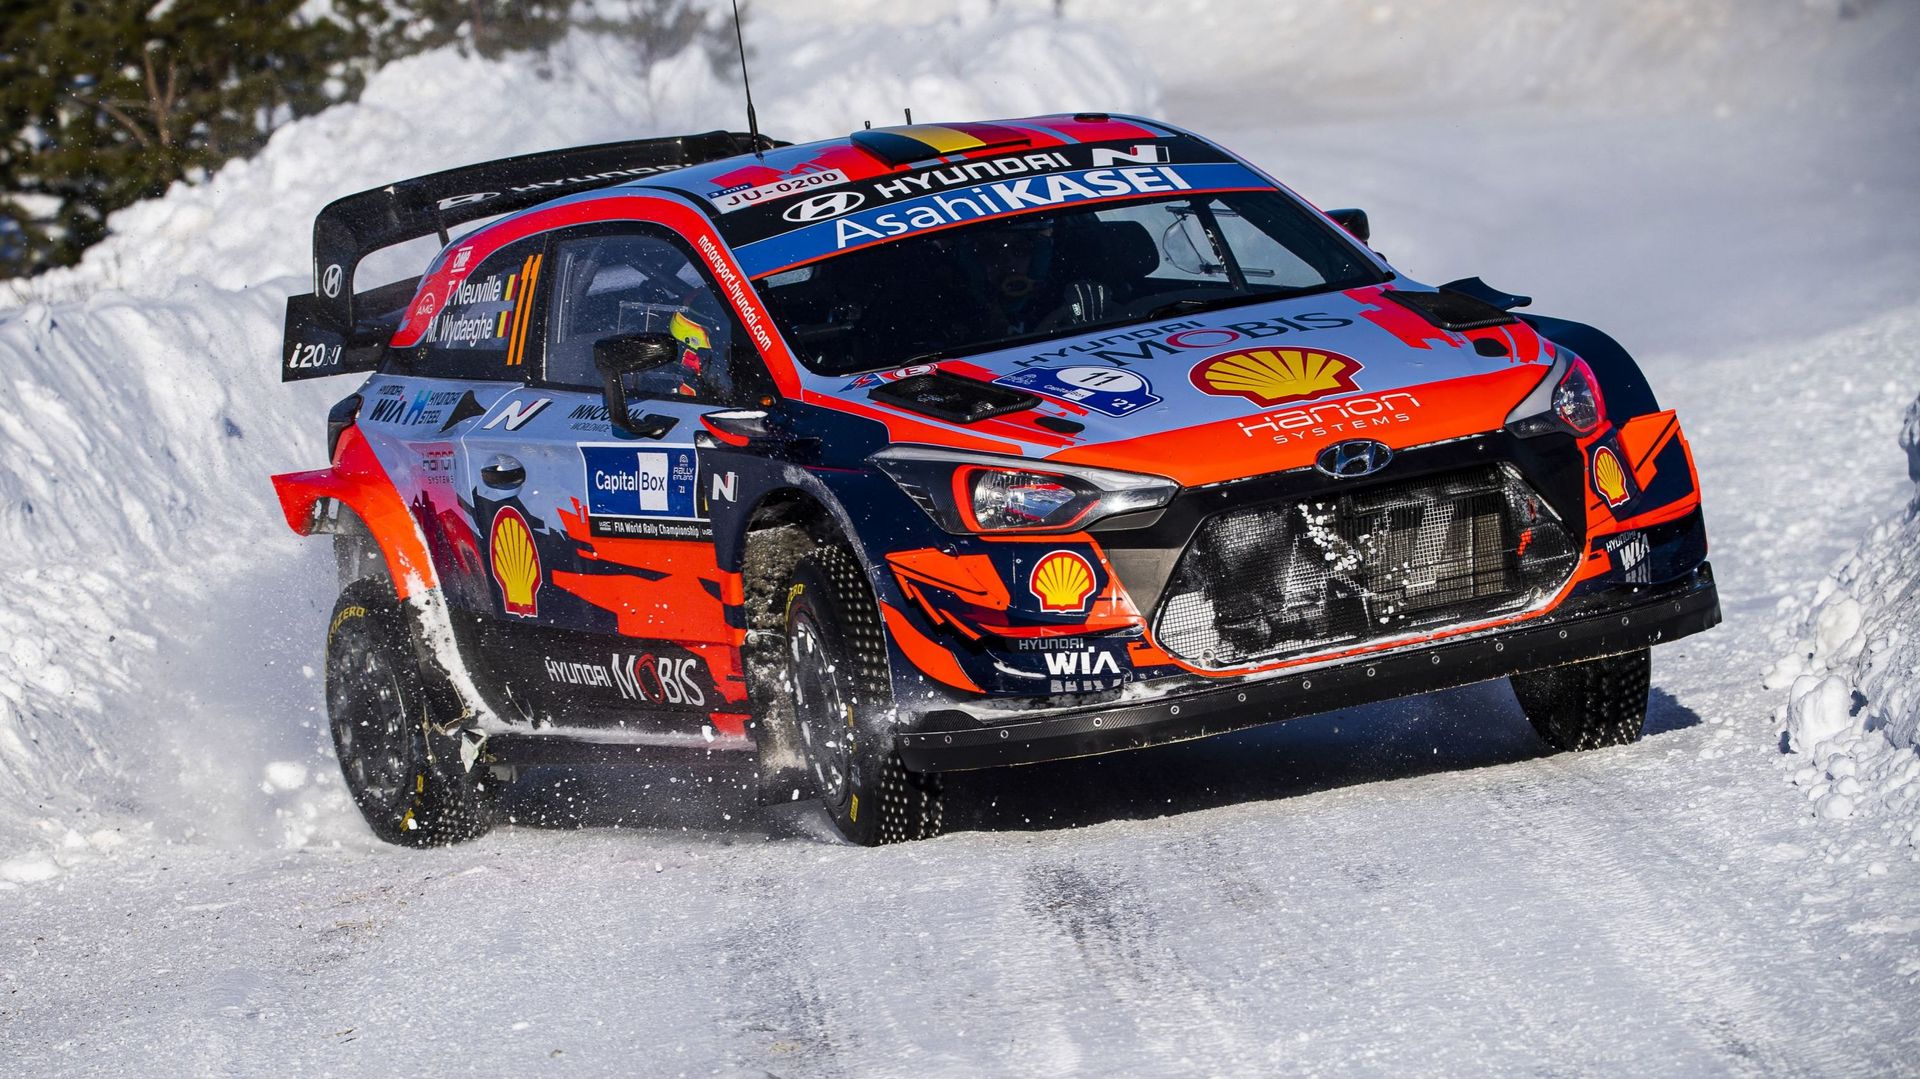 Auto: World rally championship (WRC), Arctic Rally